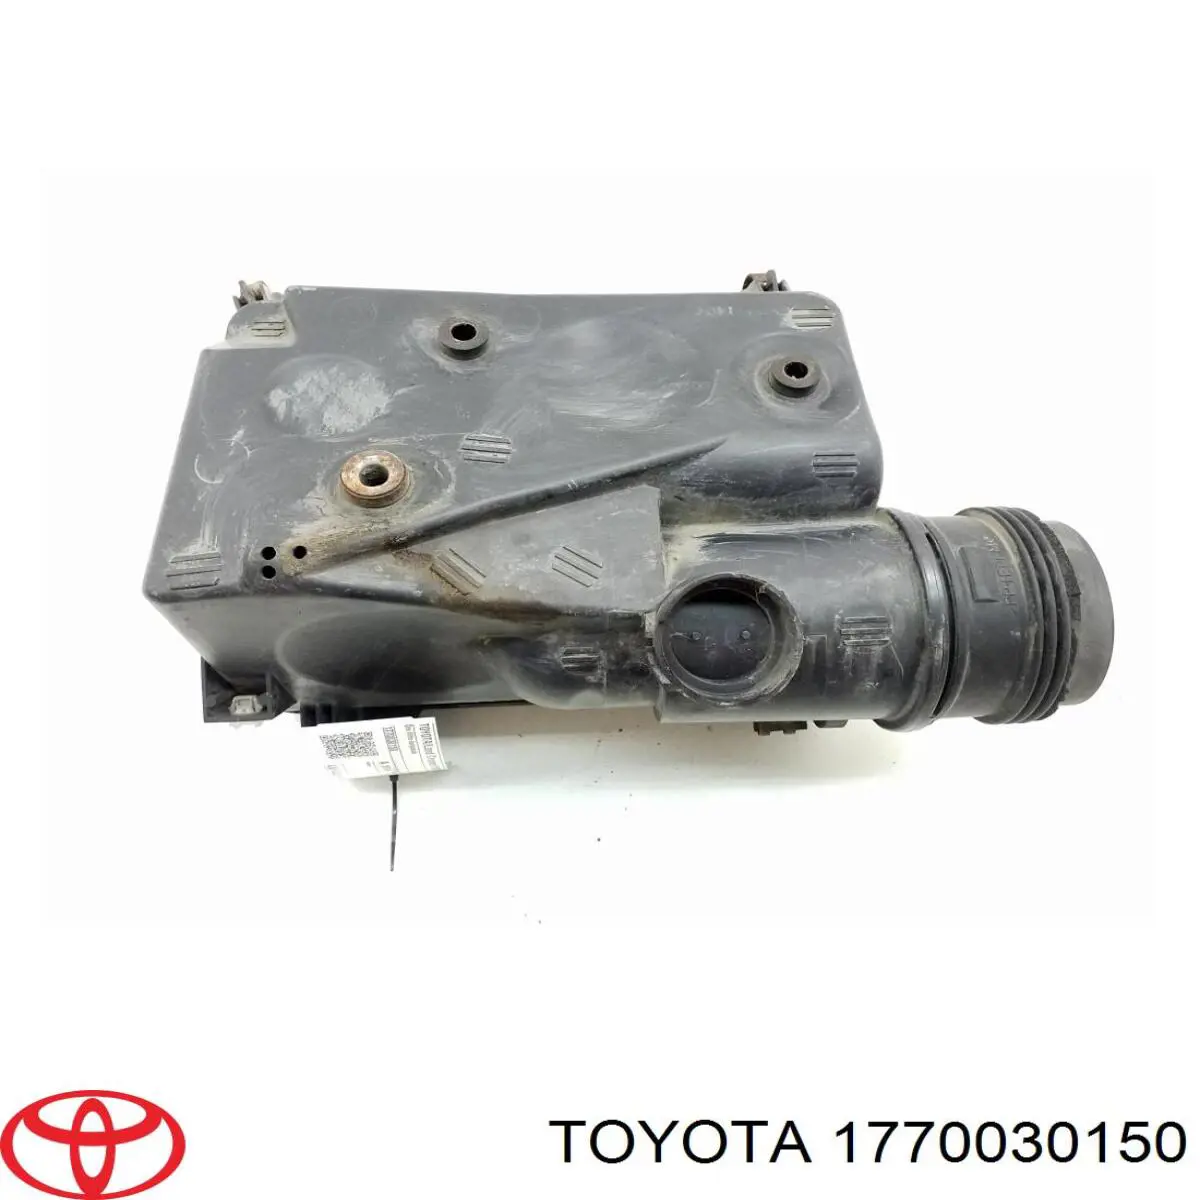 Pestillo (soporte) de la caja del filtro de aire Toyota 1770030150